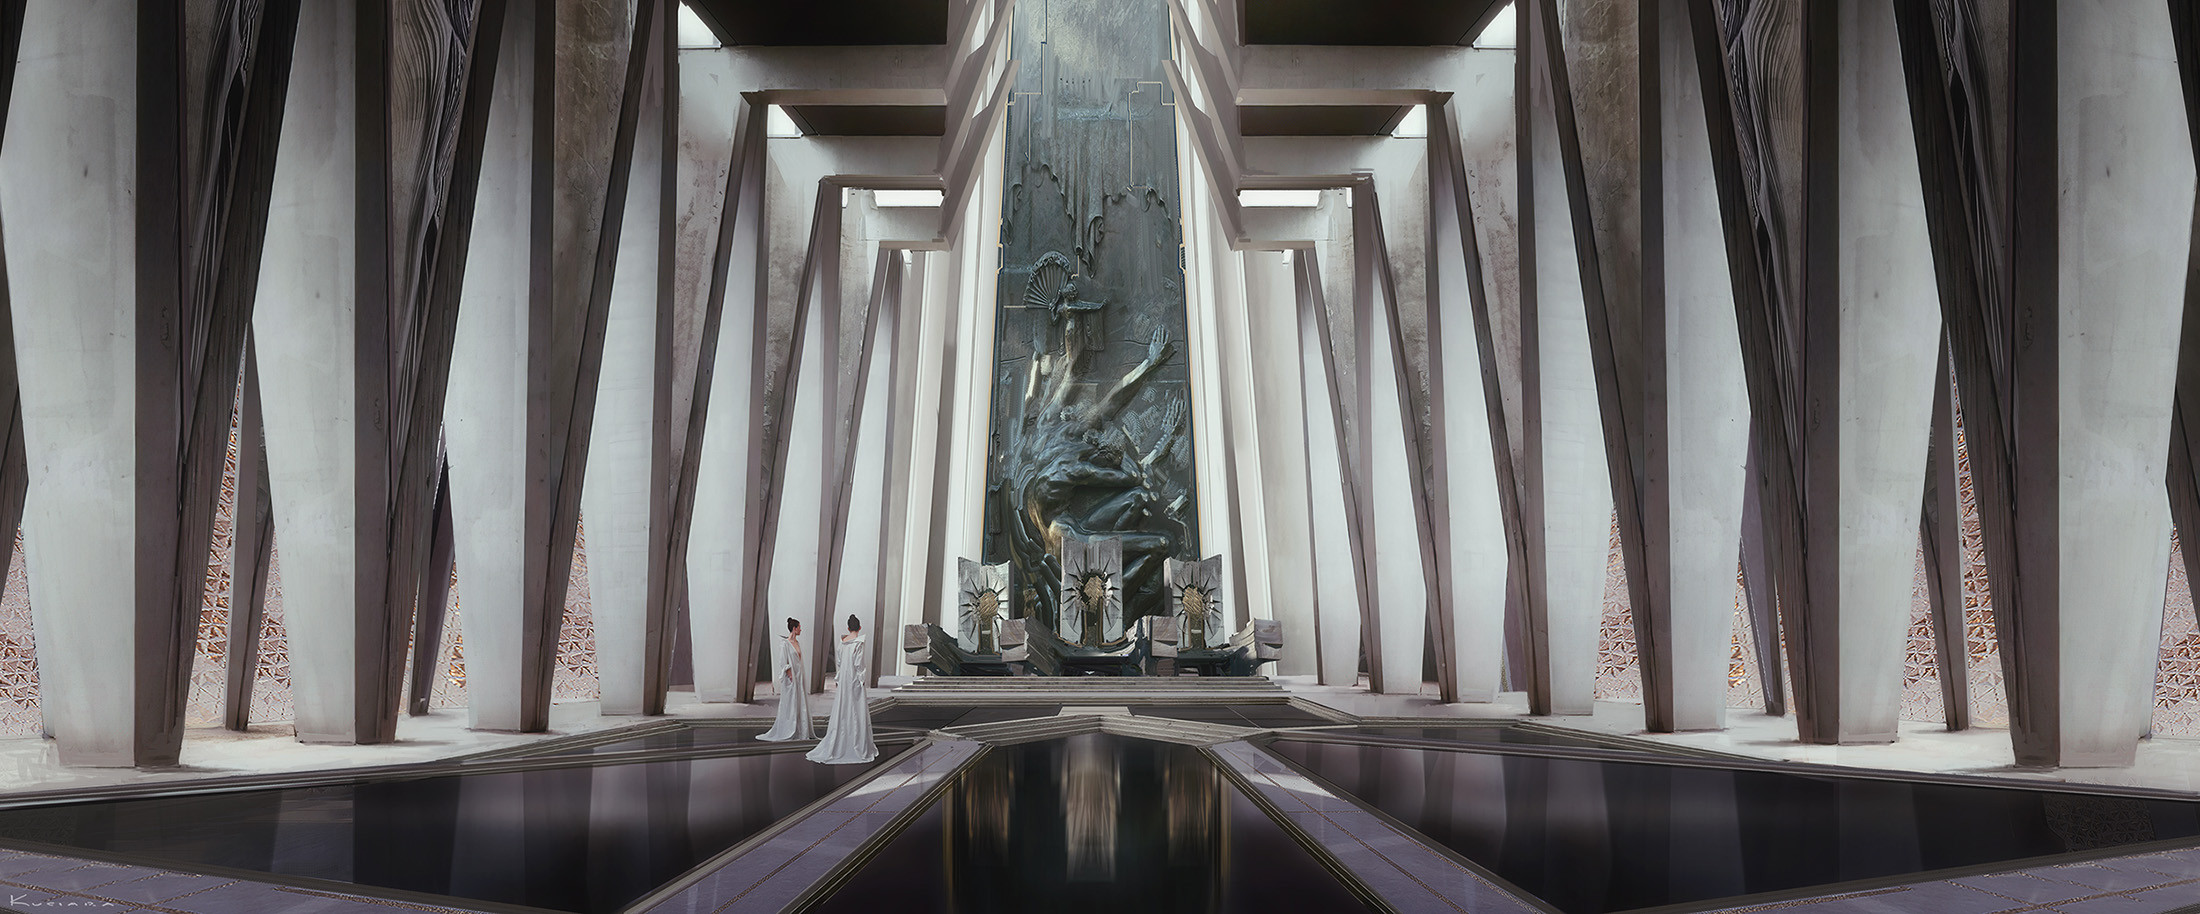 Artwork Digital Art White Throne Room Throne 2200x914